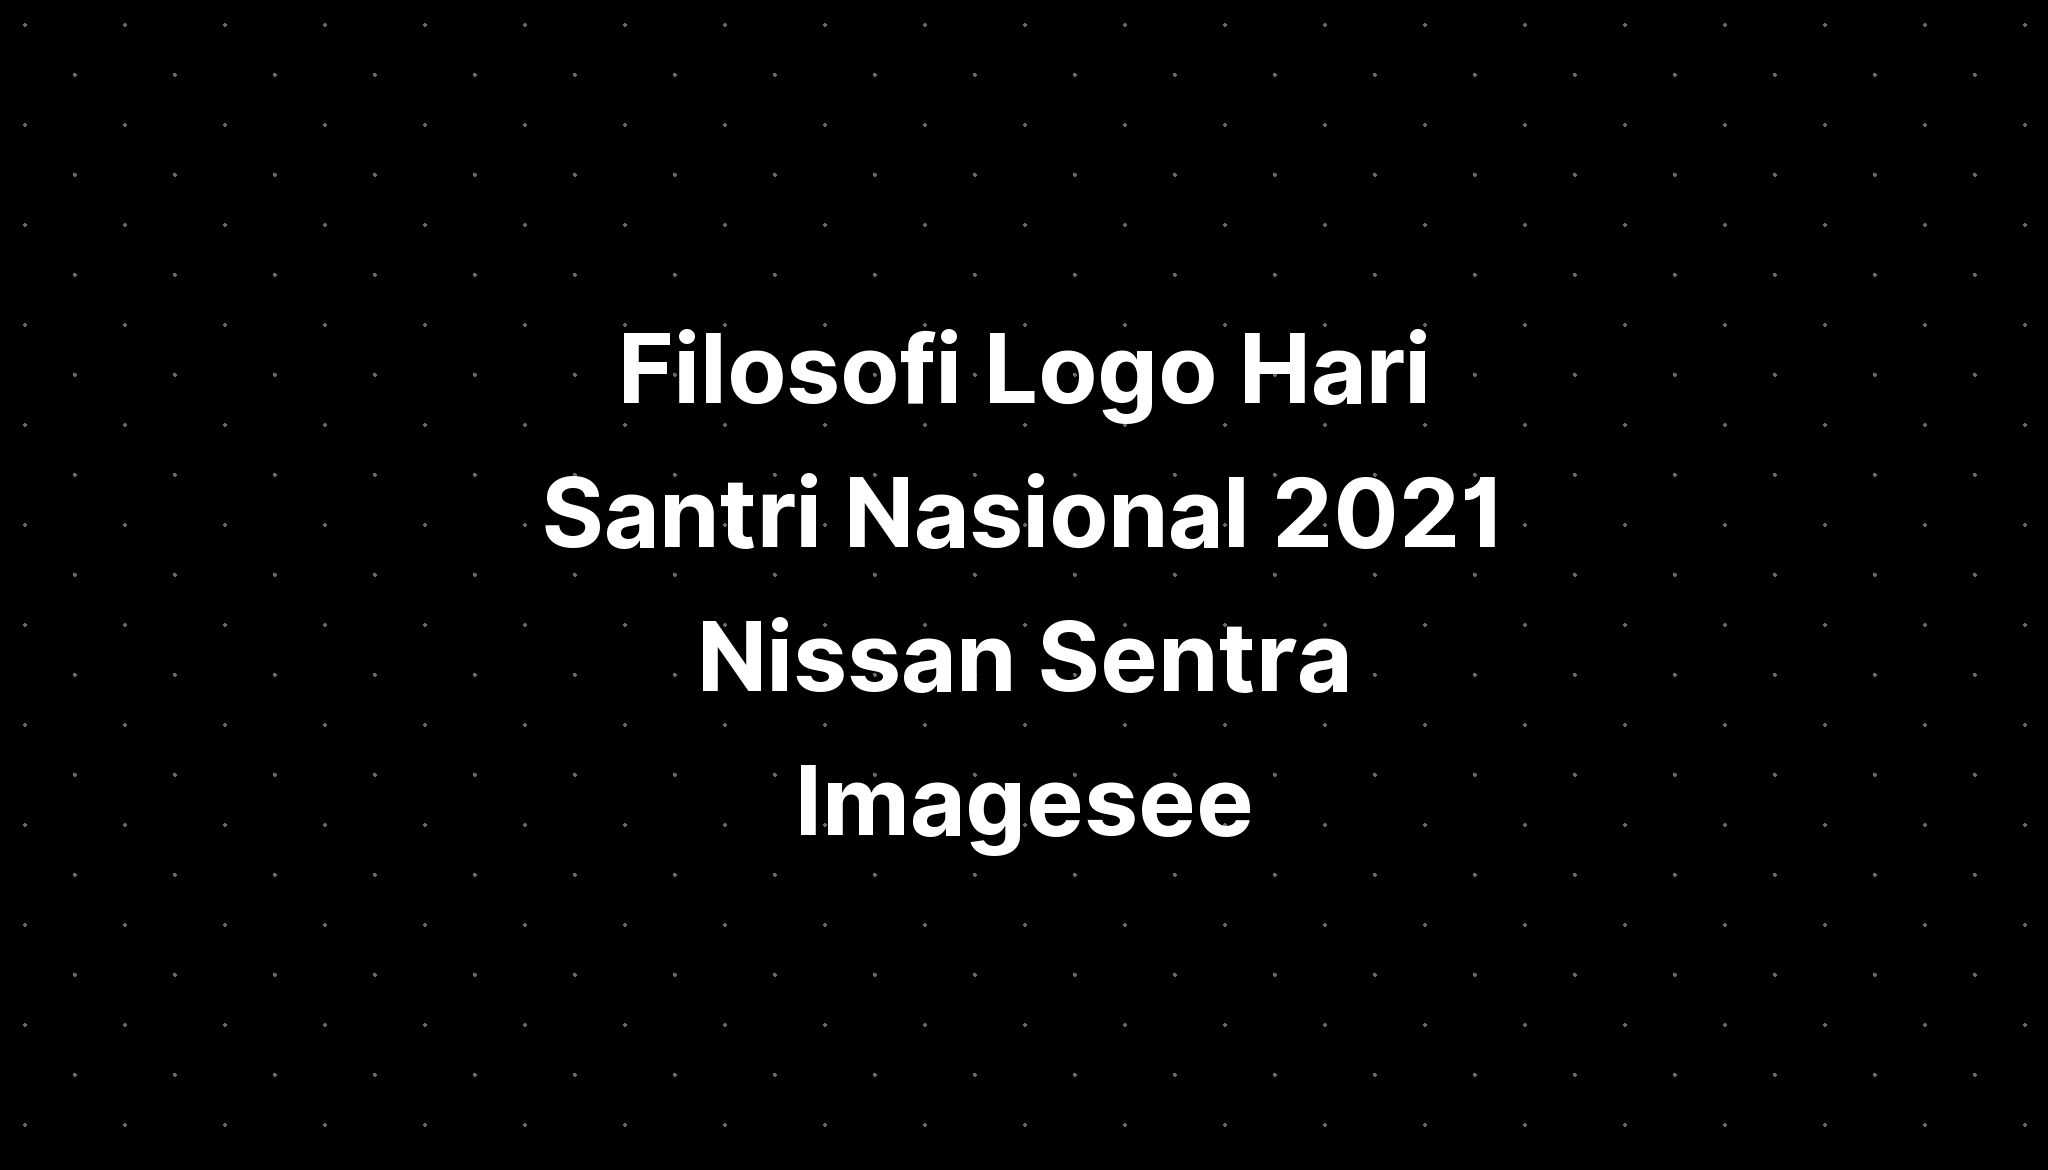 Filosofi Logo Hari Santri Nasional Nissan Sentra Imagesee Imagesee